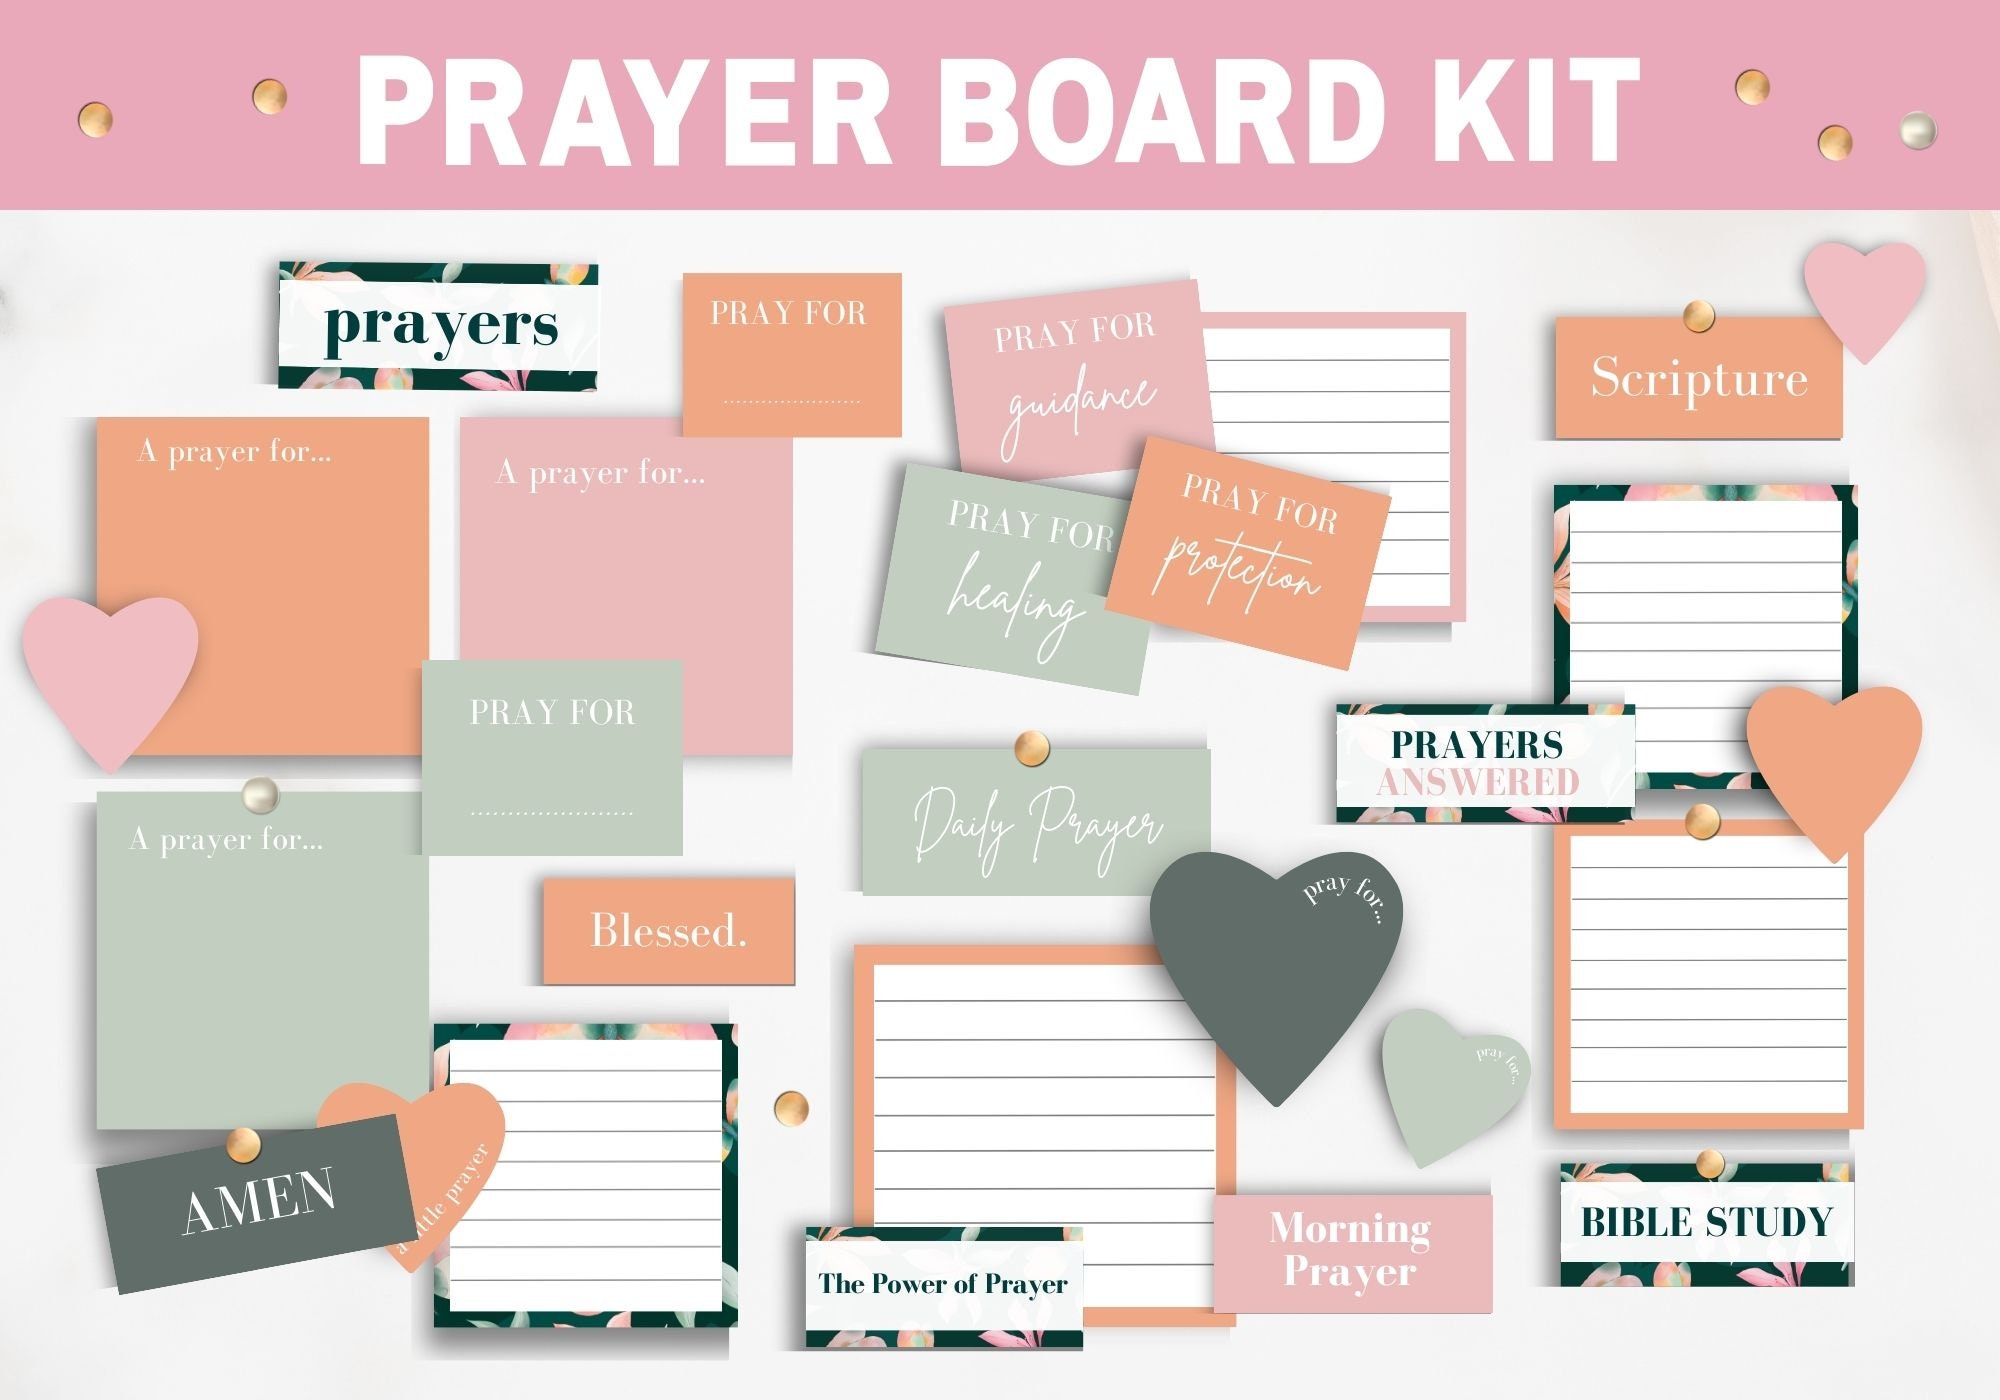 Printable Prayer Board Kit, Prayer Party Kit, Prayer Cards